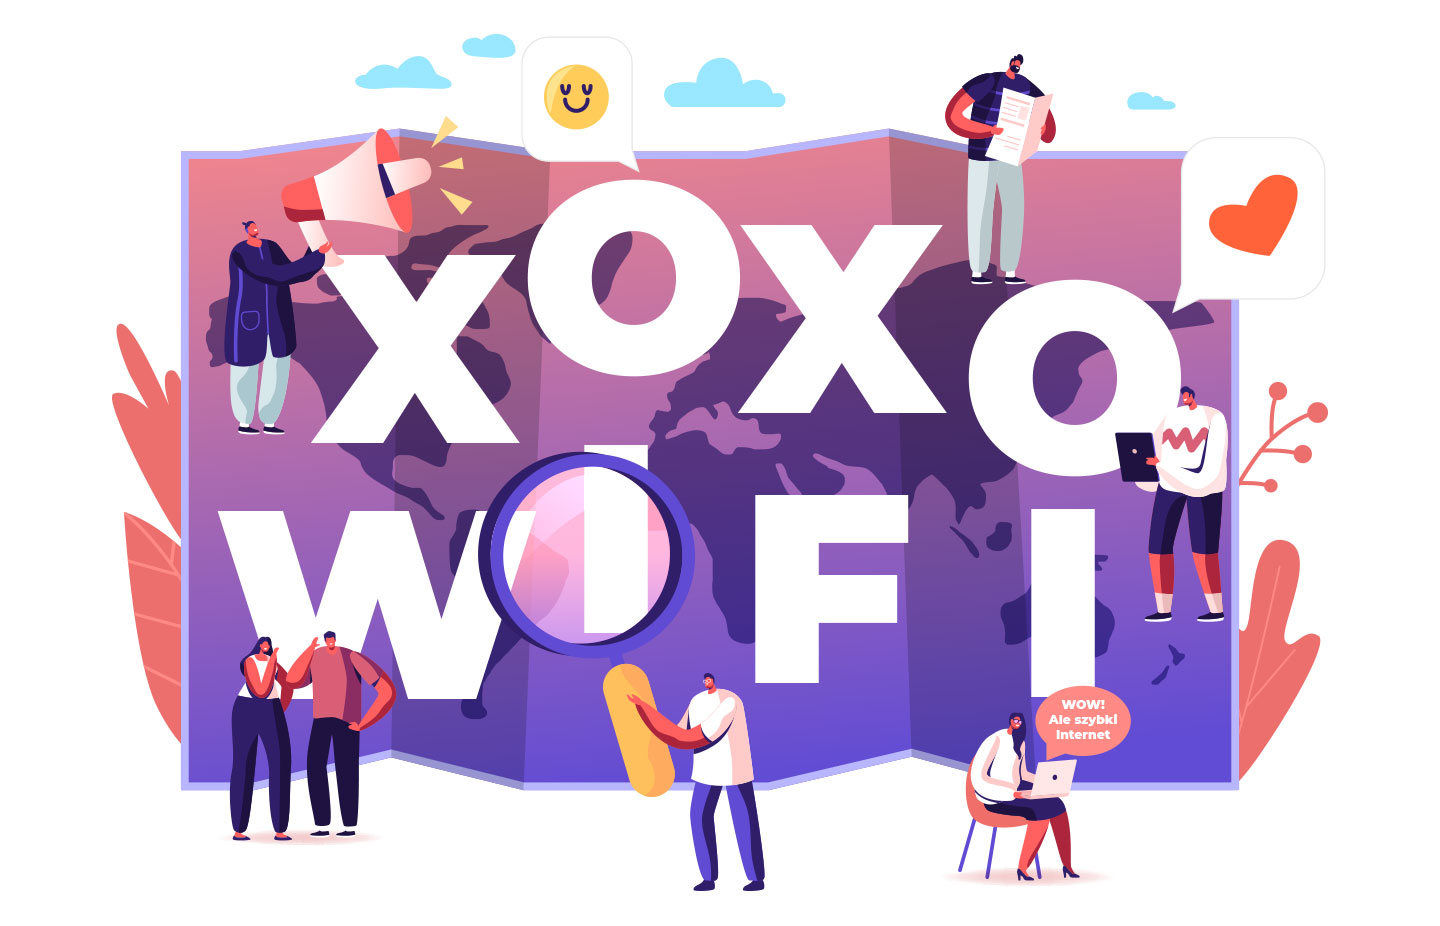 About XOXO WiFi company